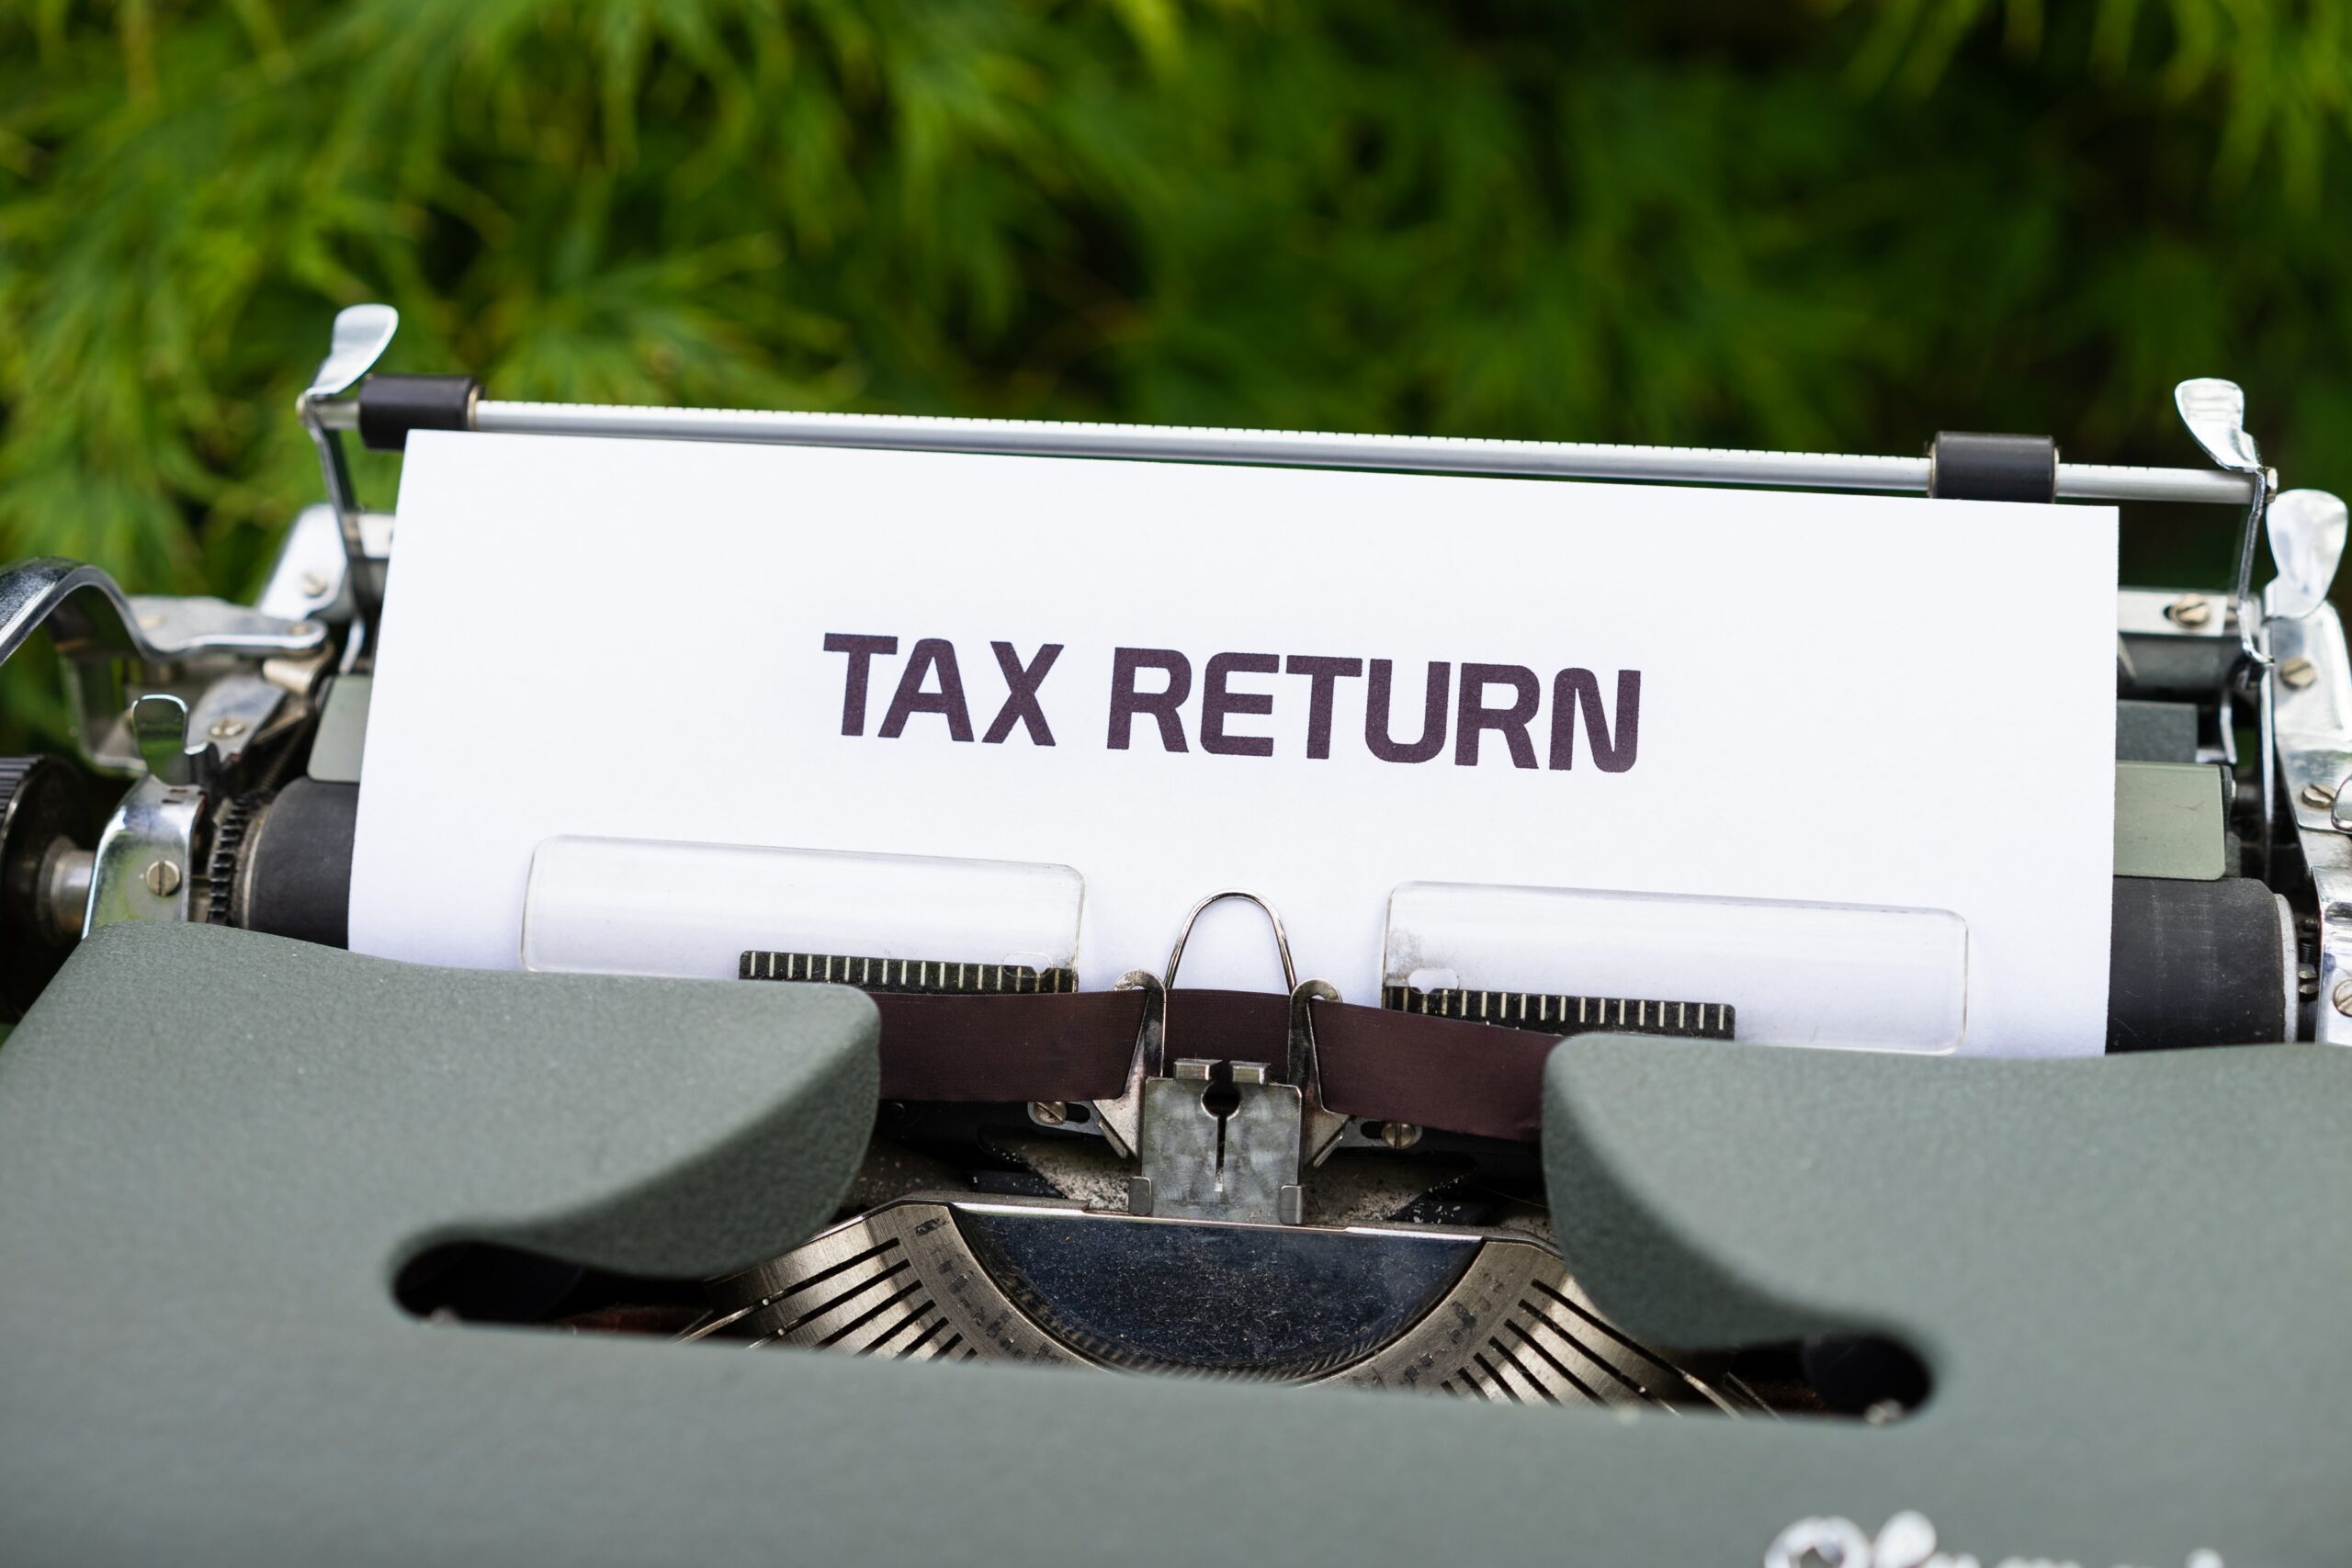 tax return by markus winkler on unsplash